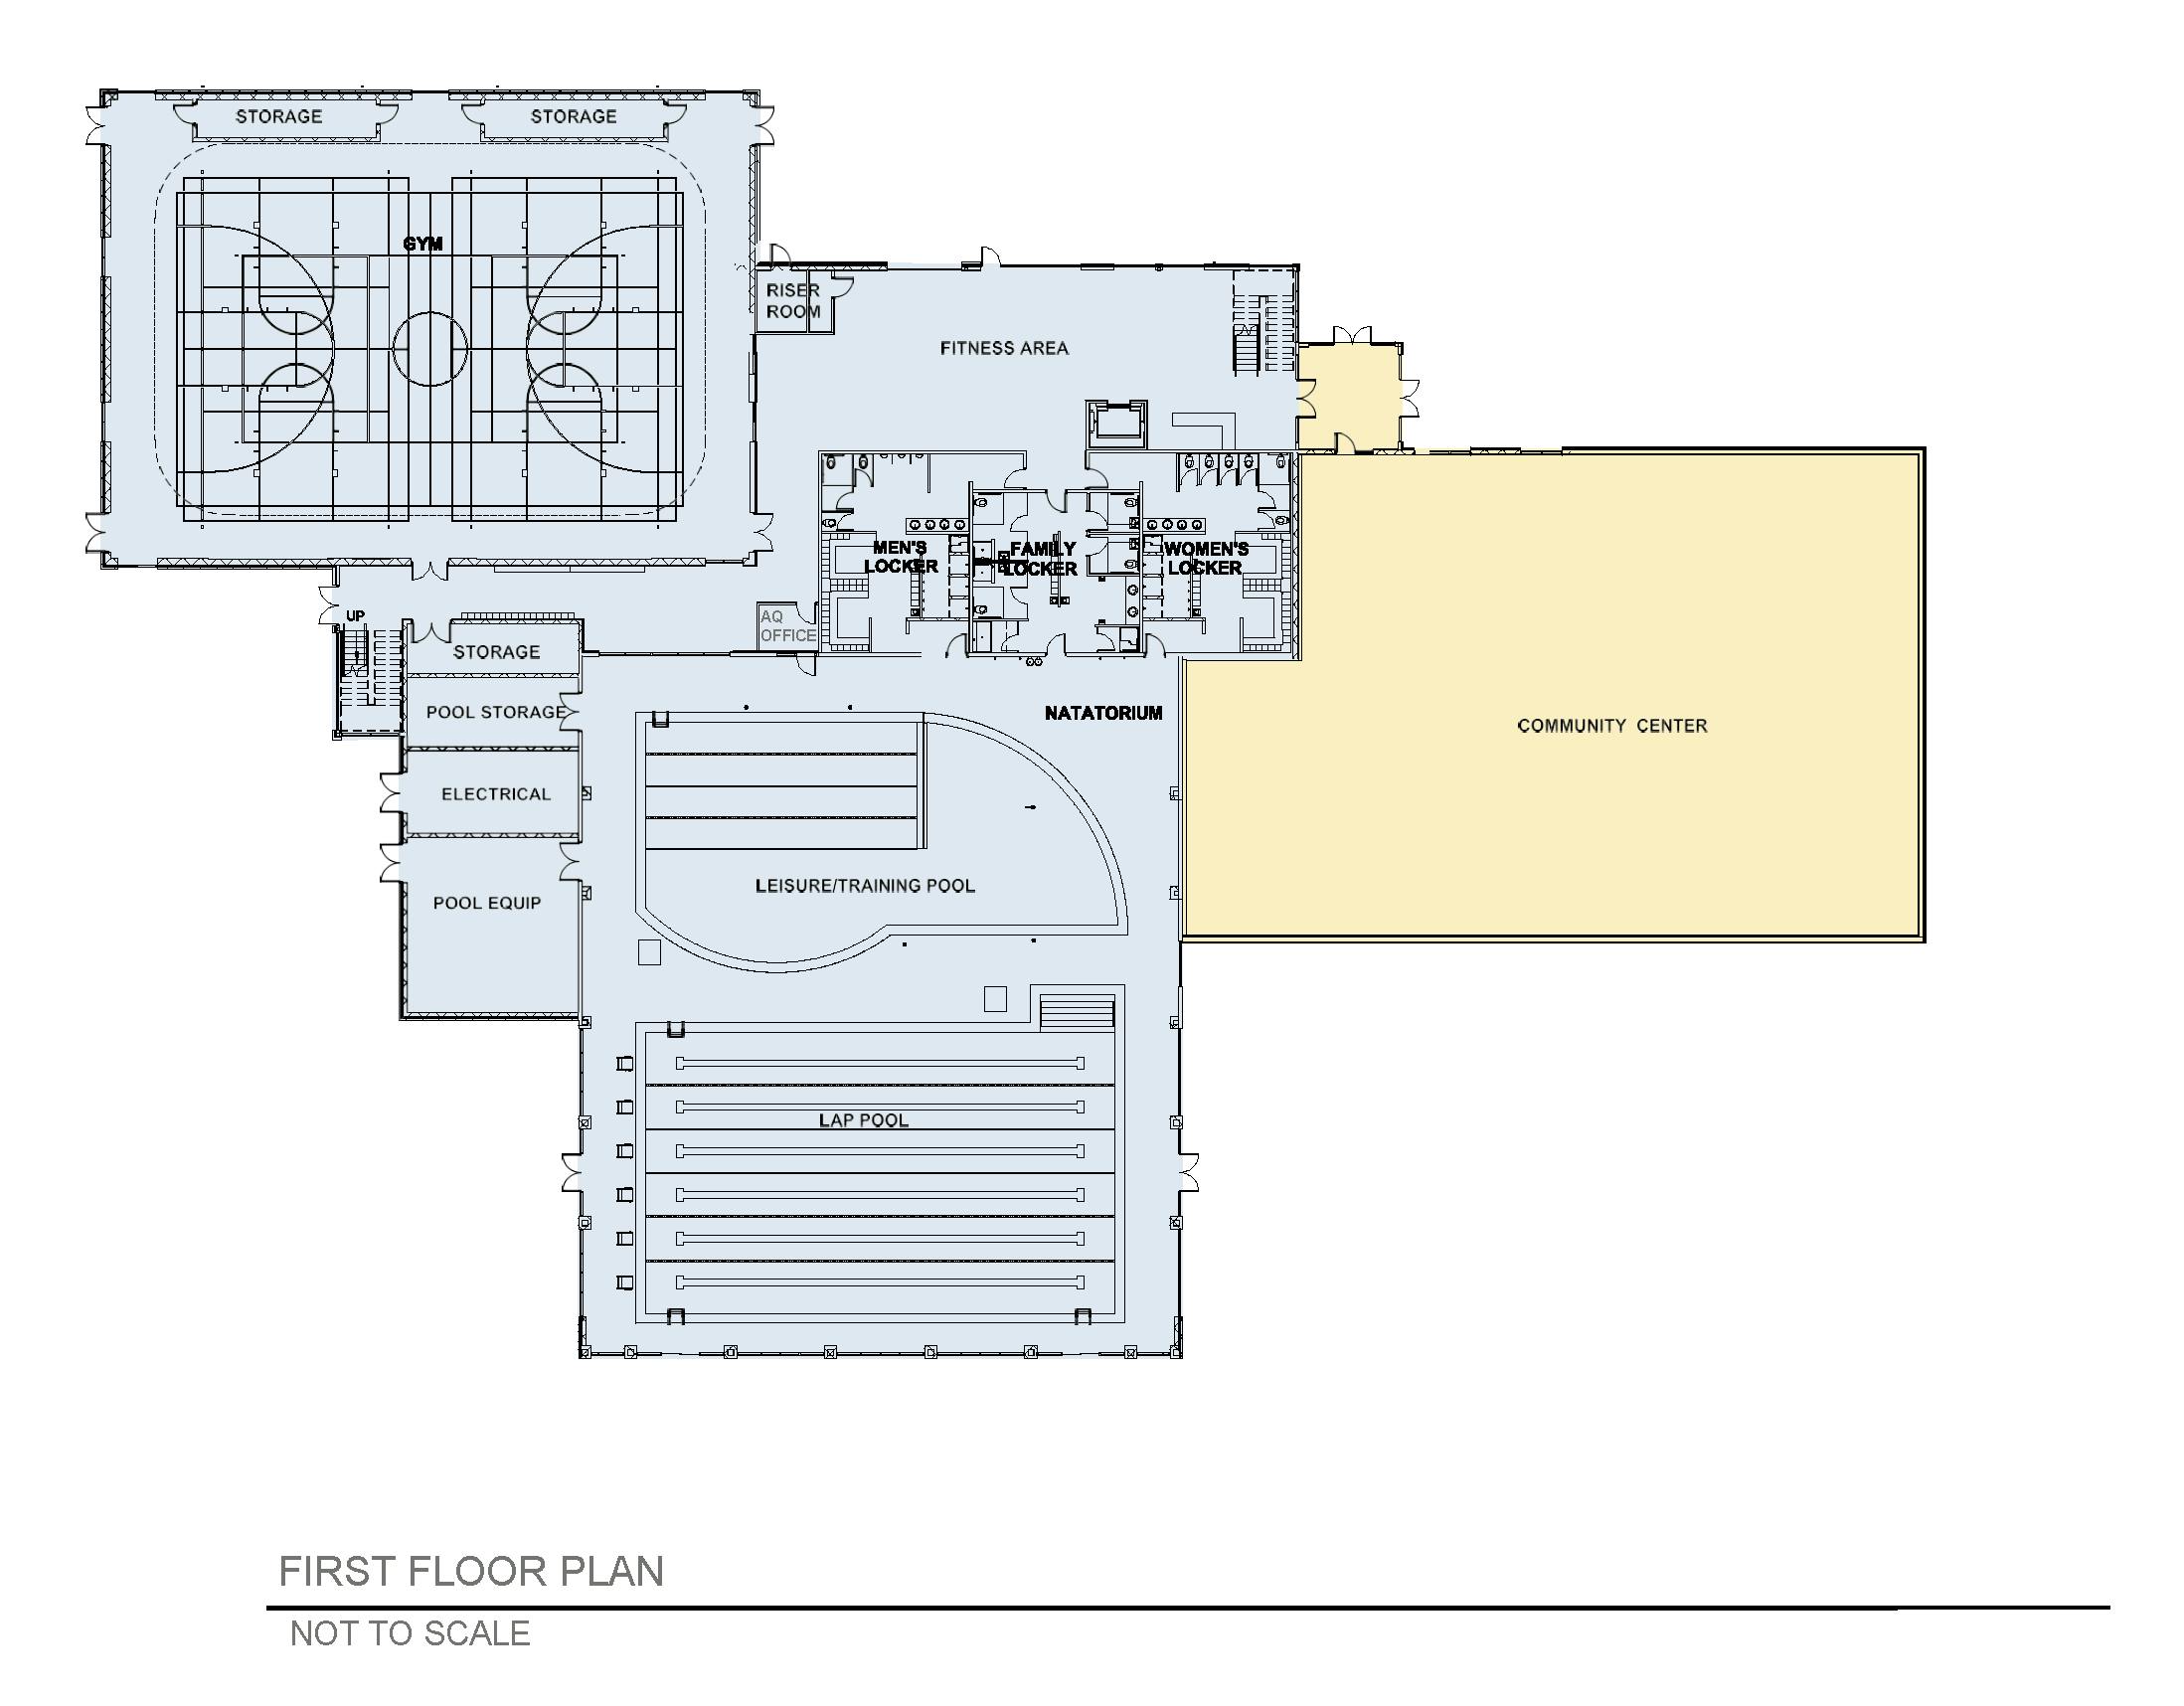 Ridgefield Recreation and Community Center, First Floor Plan